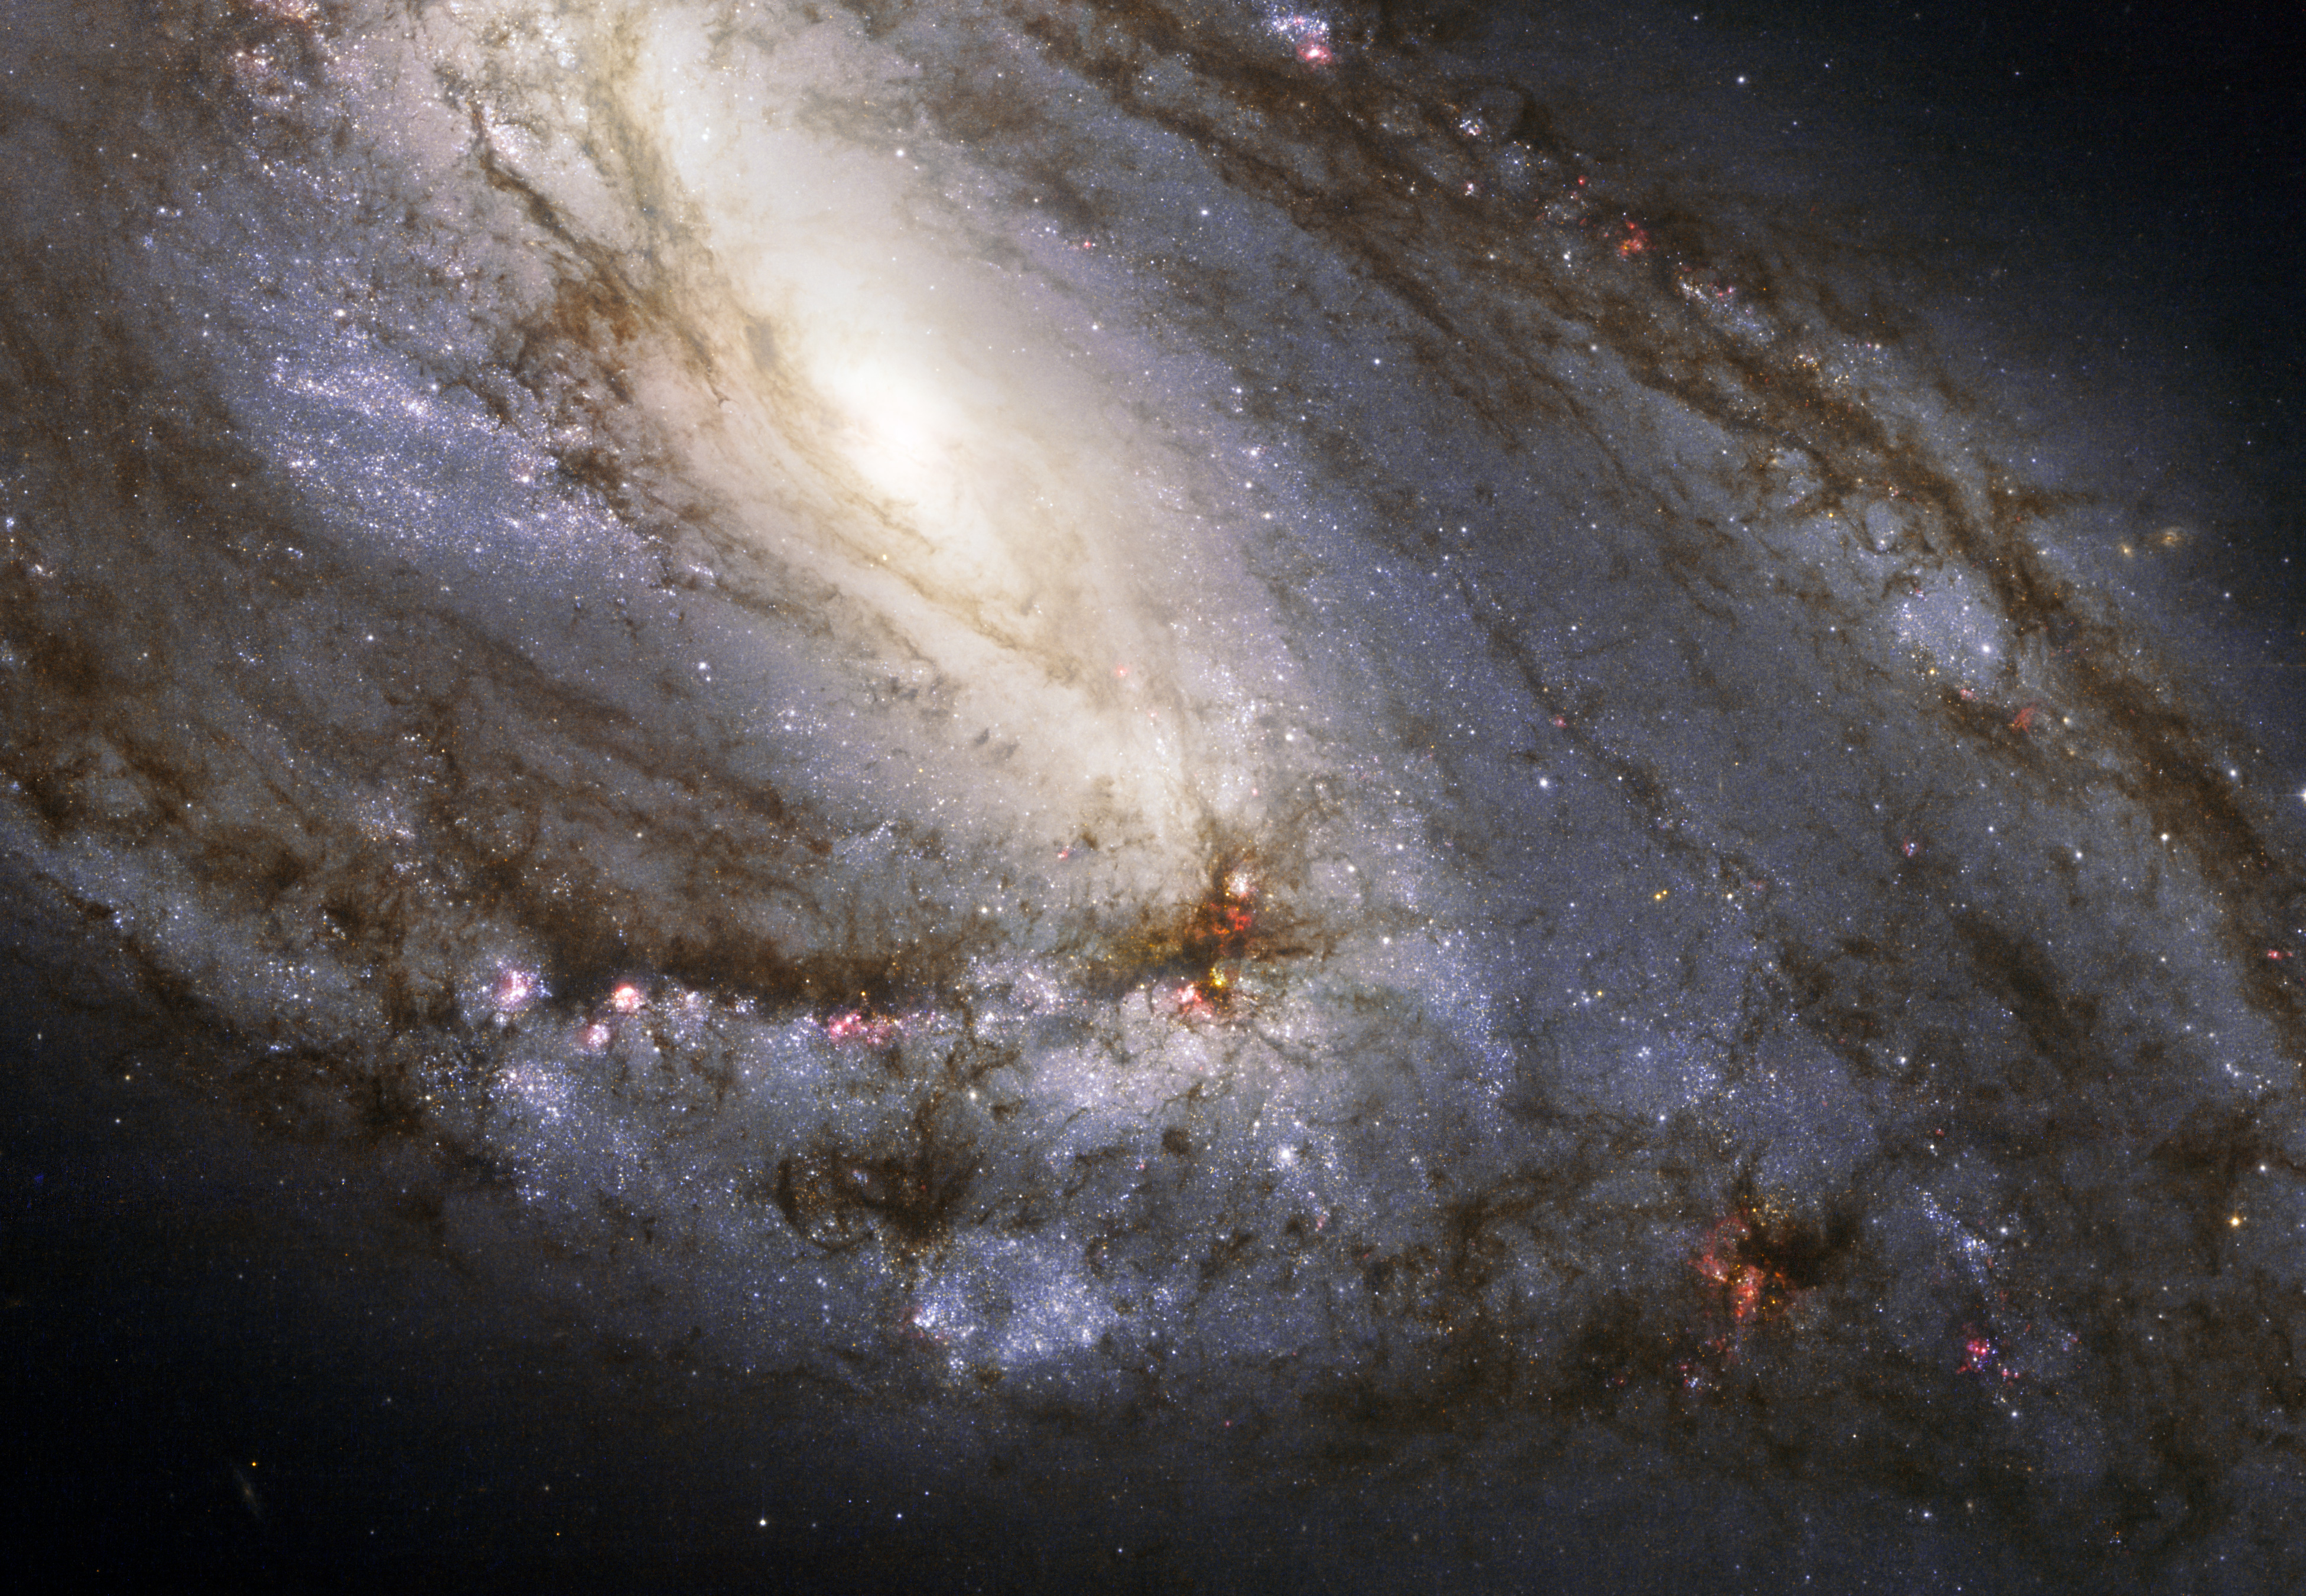 APOD: 2010 April 13 - Unusual Spiral Galaxy M66 from Hubble